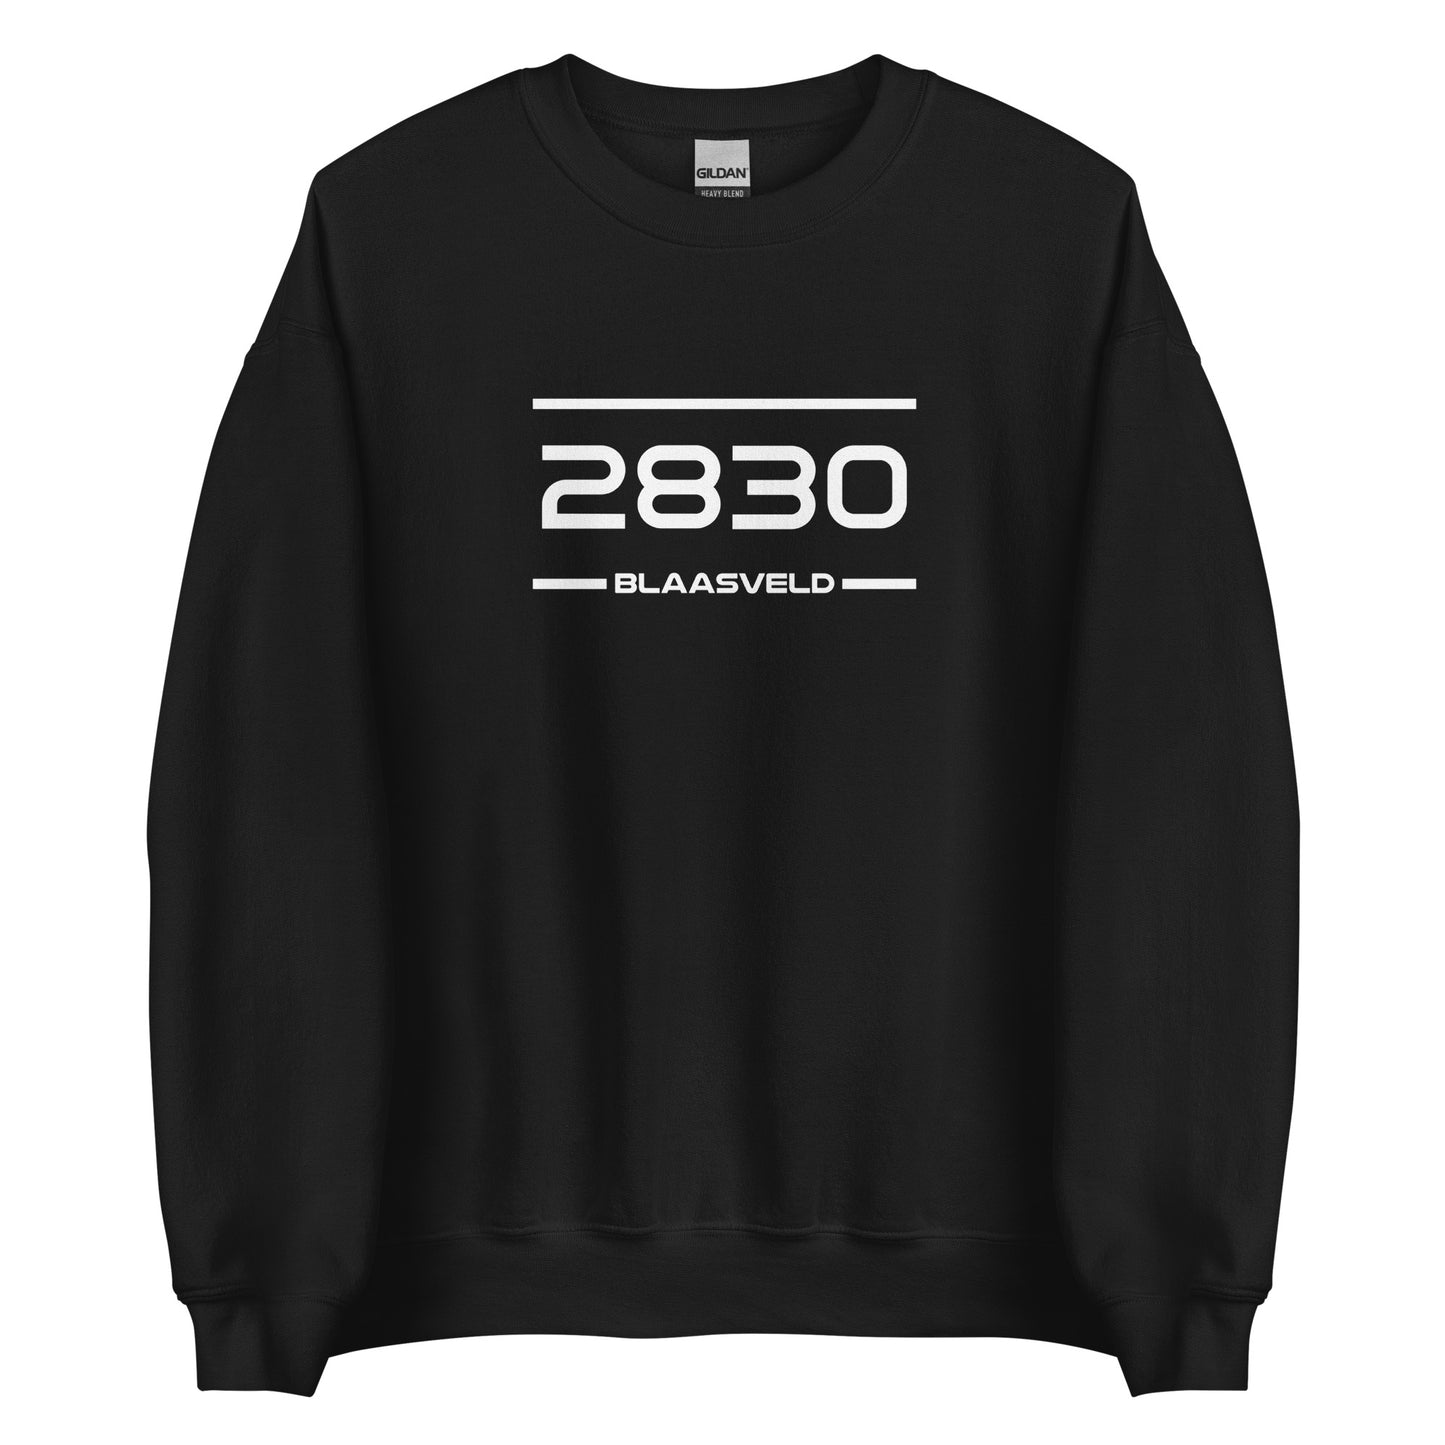 Sweater - 2830 - Blaasveld (M/V)